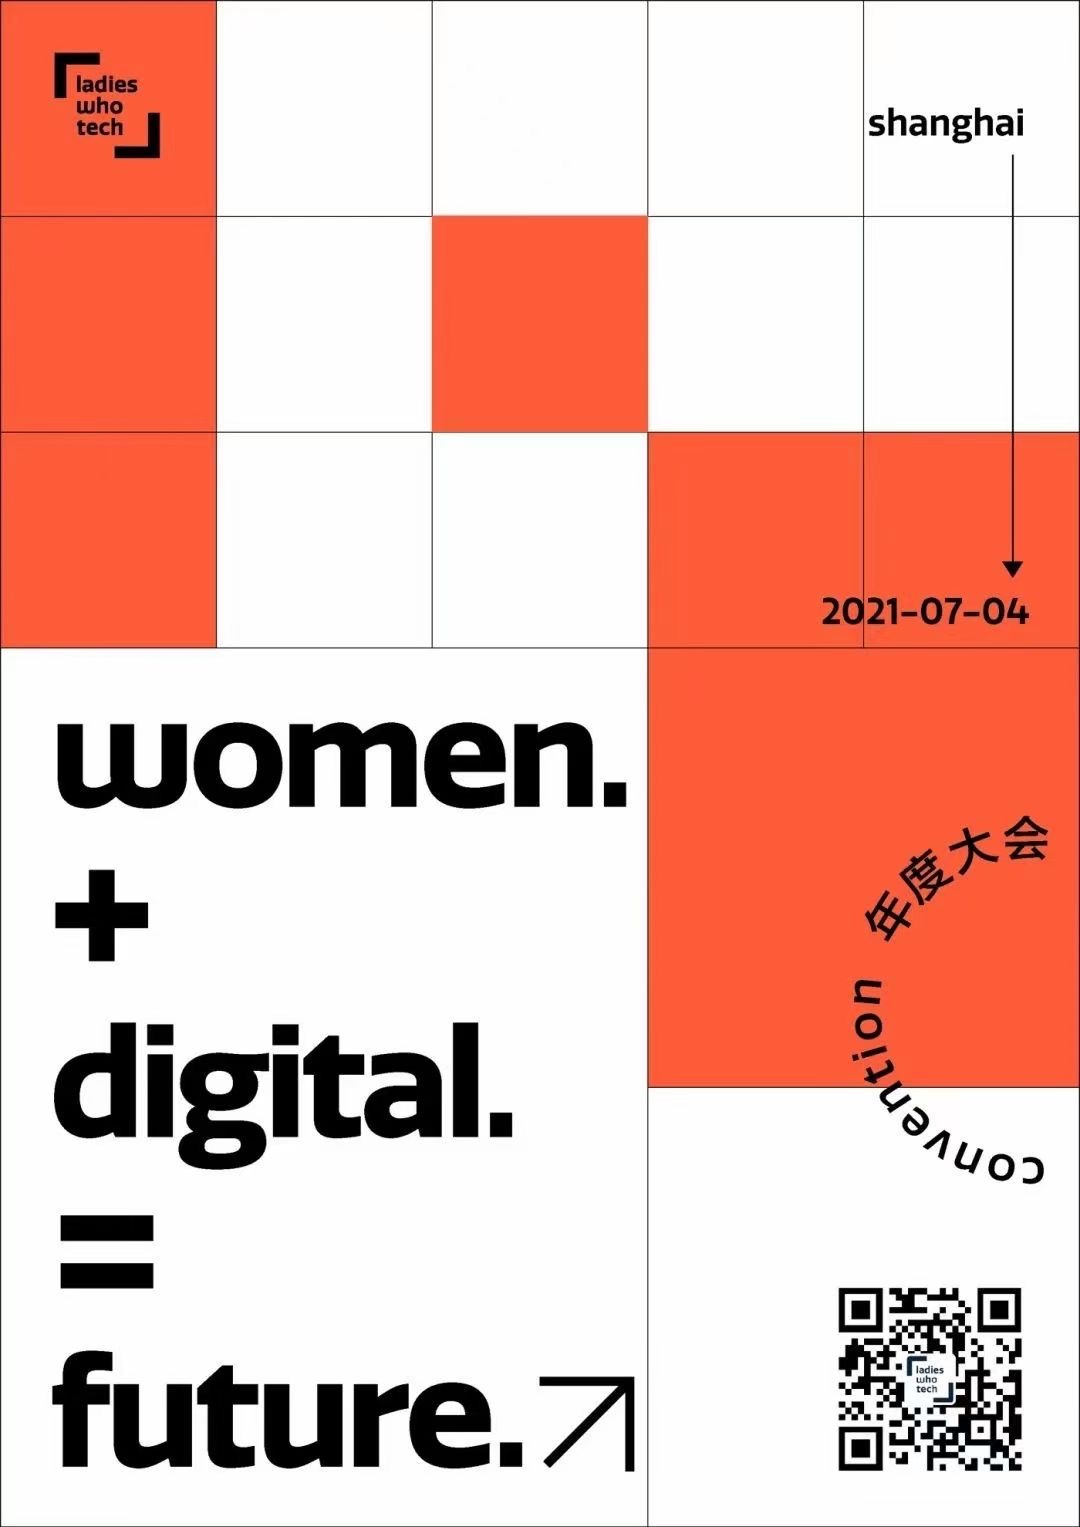 women.+digital=future| Shanghai Events